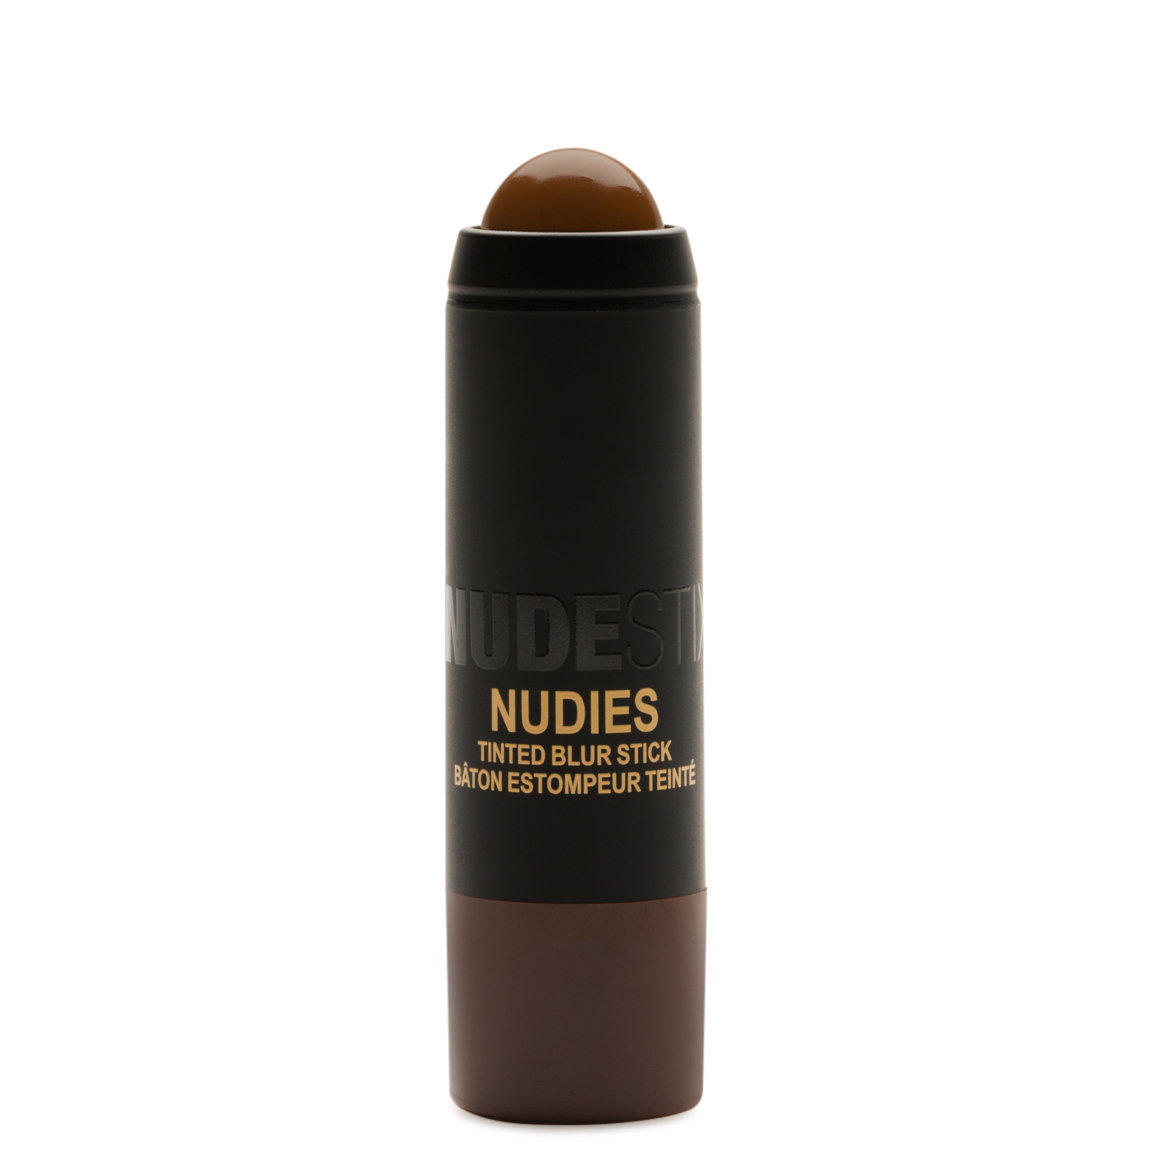 NudeStix Nudies Tinted Blur Stick Deep 10